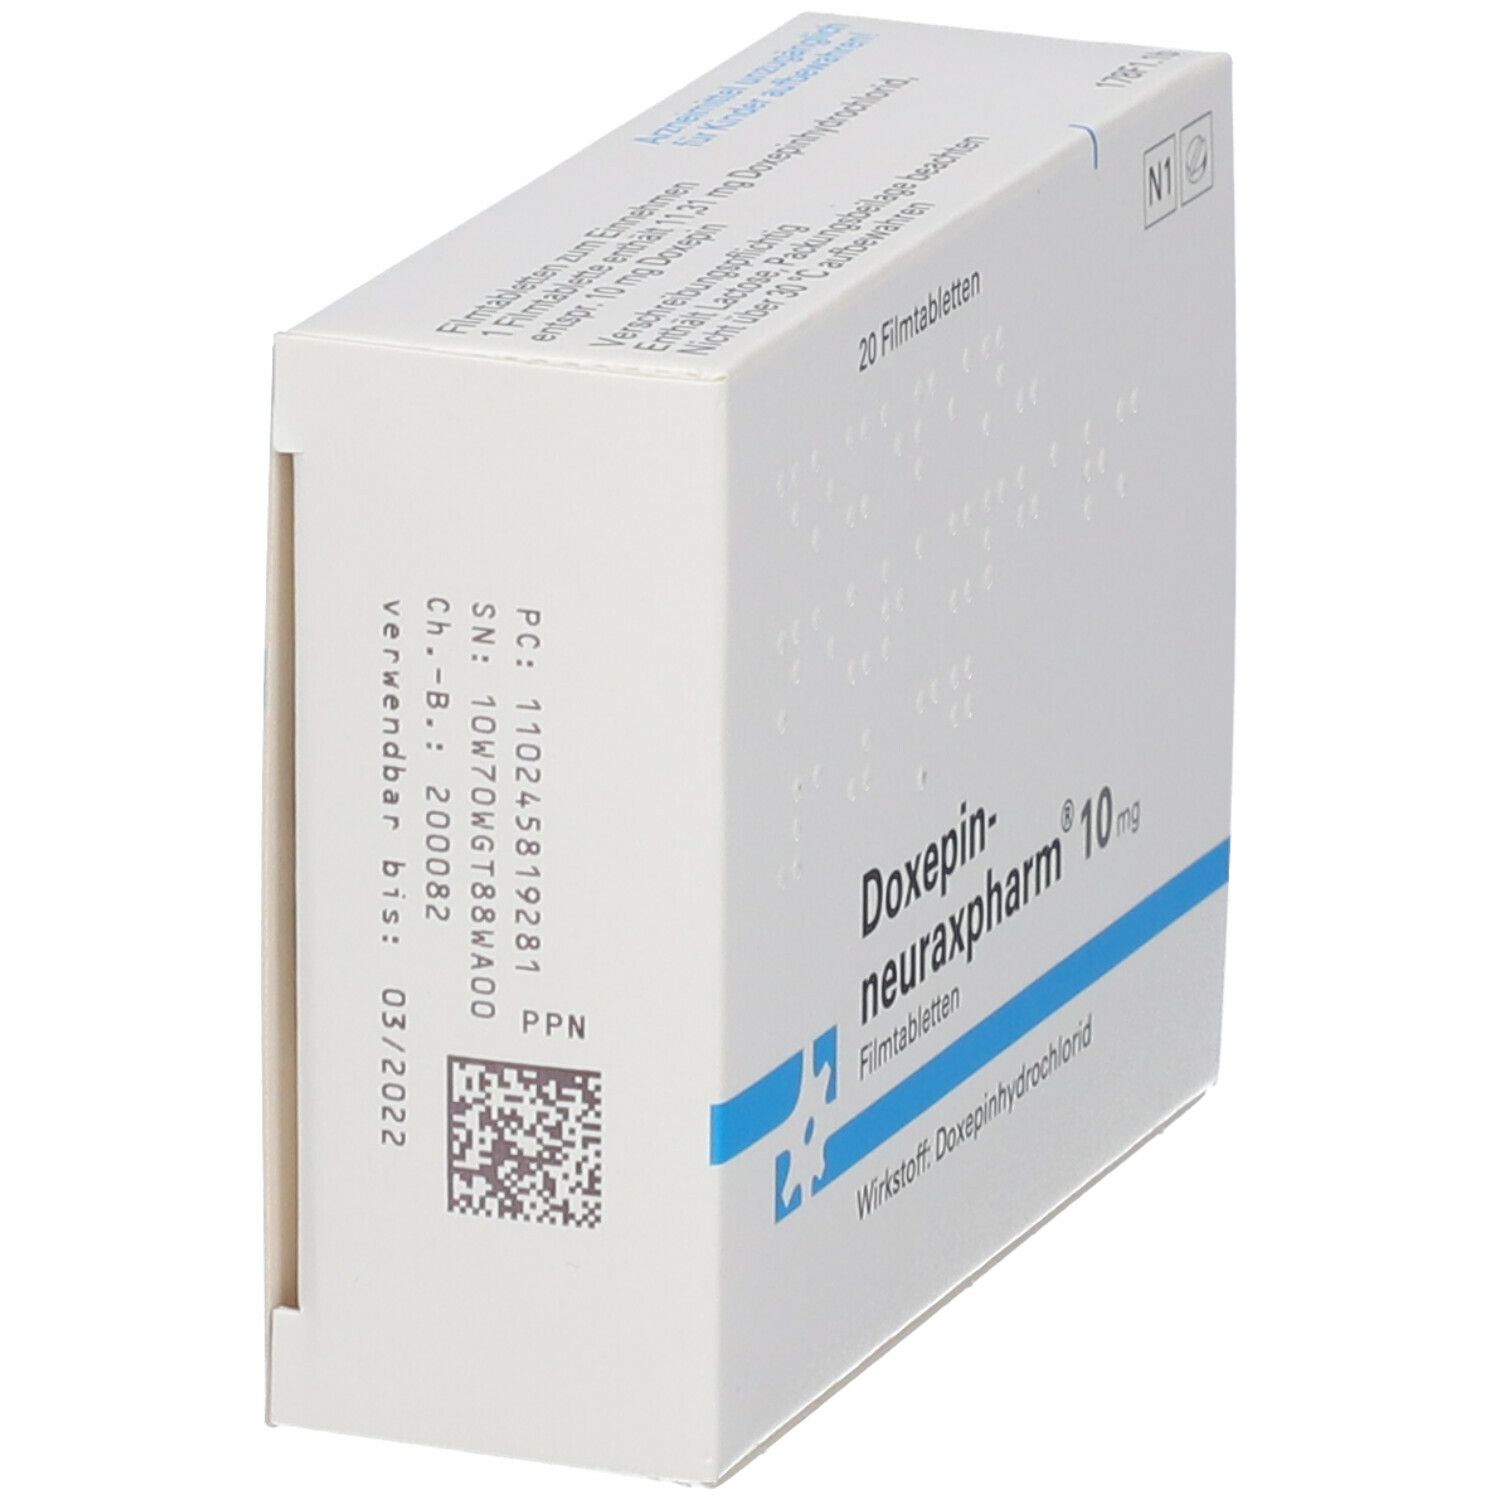 Doxepin-neuraxpharm® 10 mg